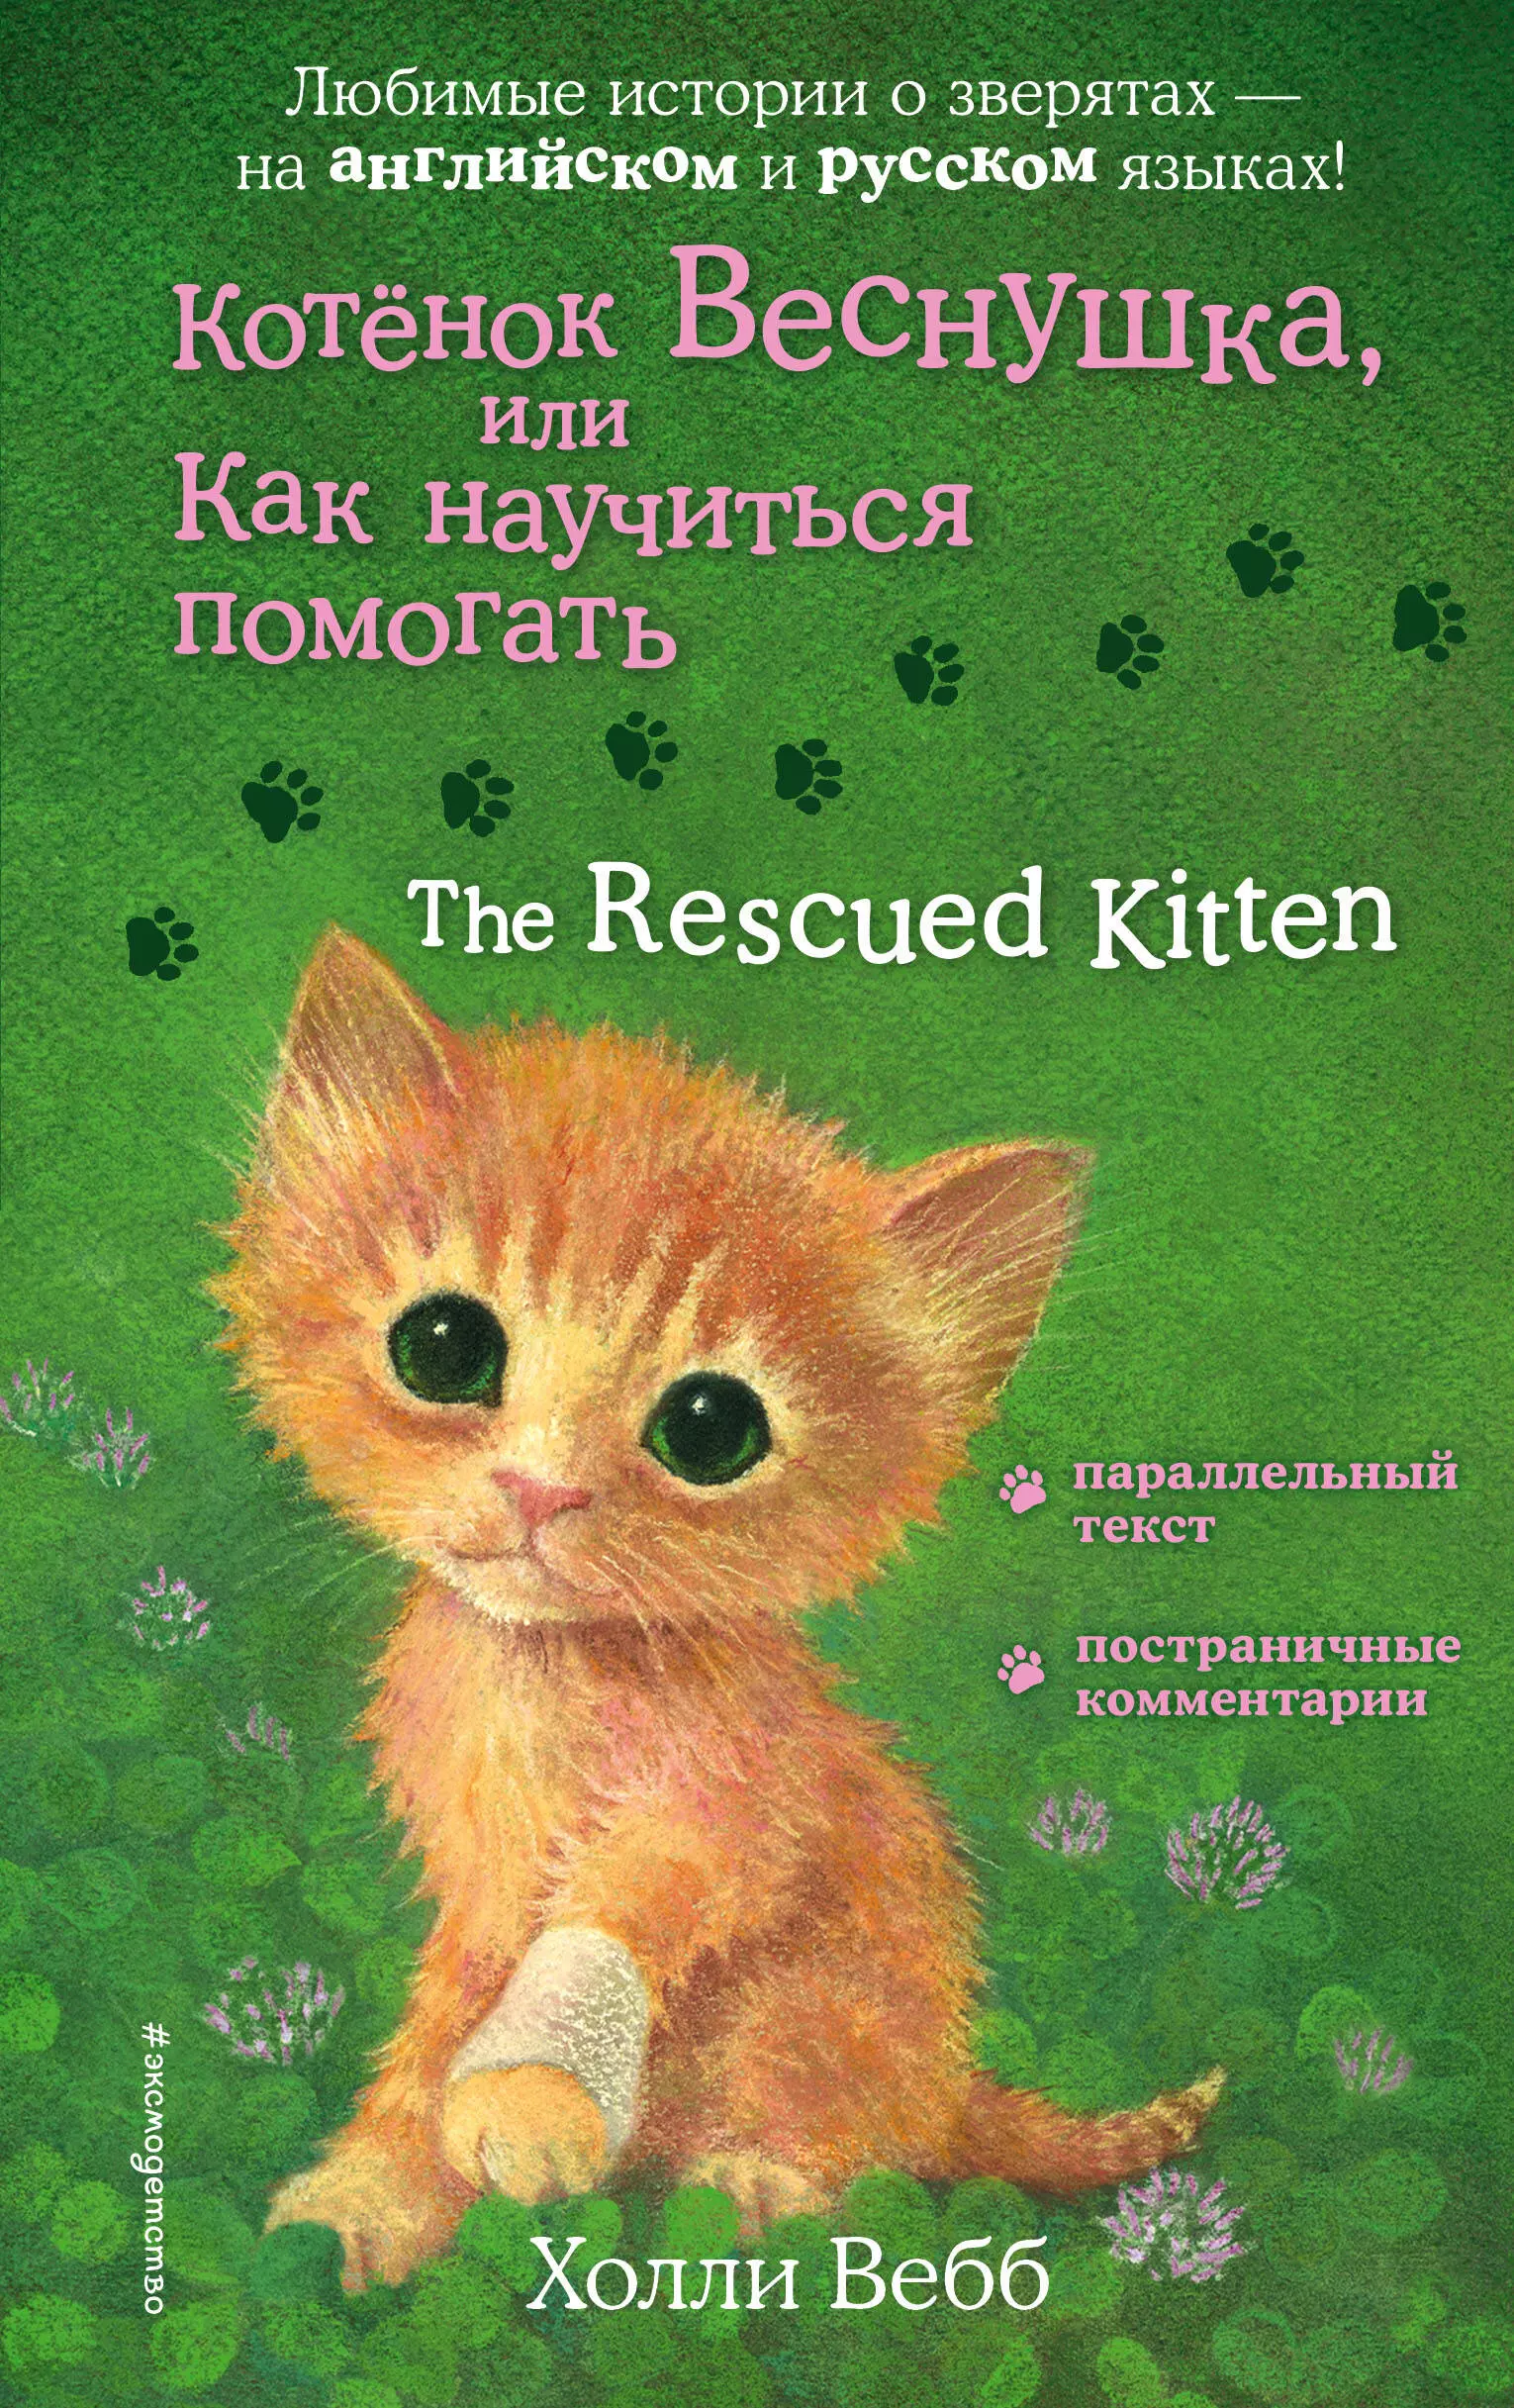 Котенок Веснушка, или Как научиться помогать = The Rescued Kitten вебб холли котенок веснушка или как научиться помогать